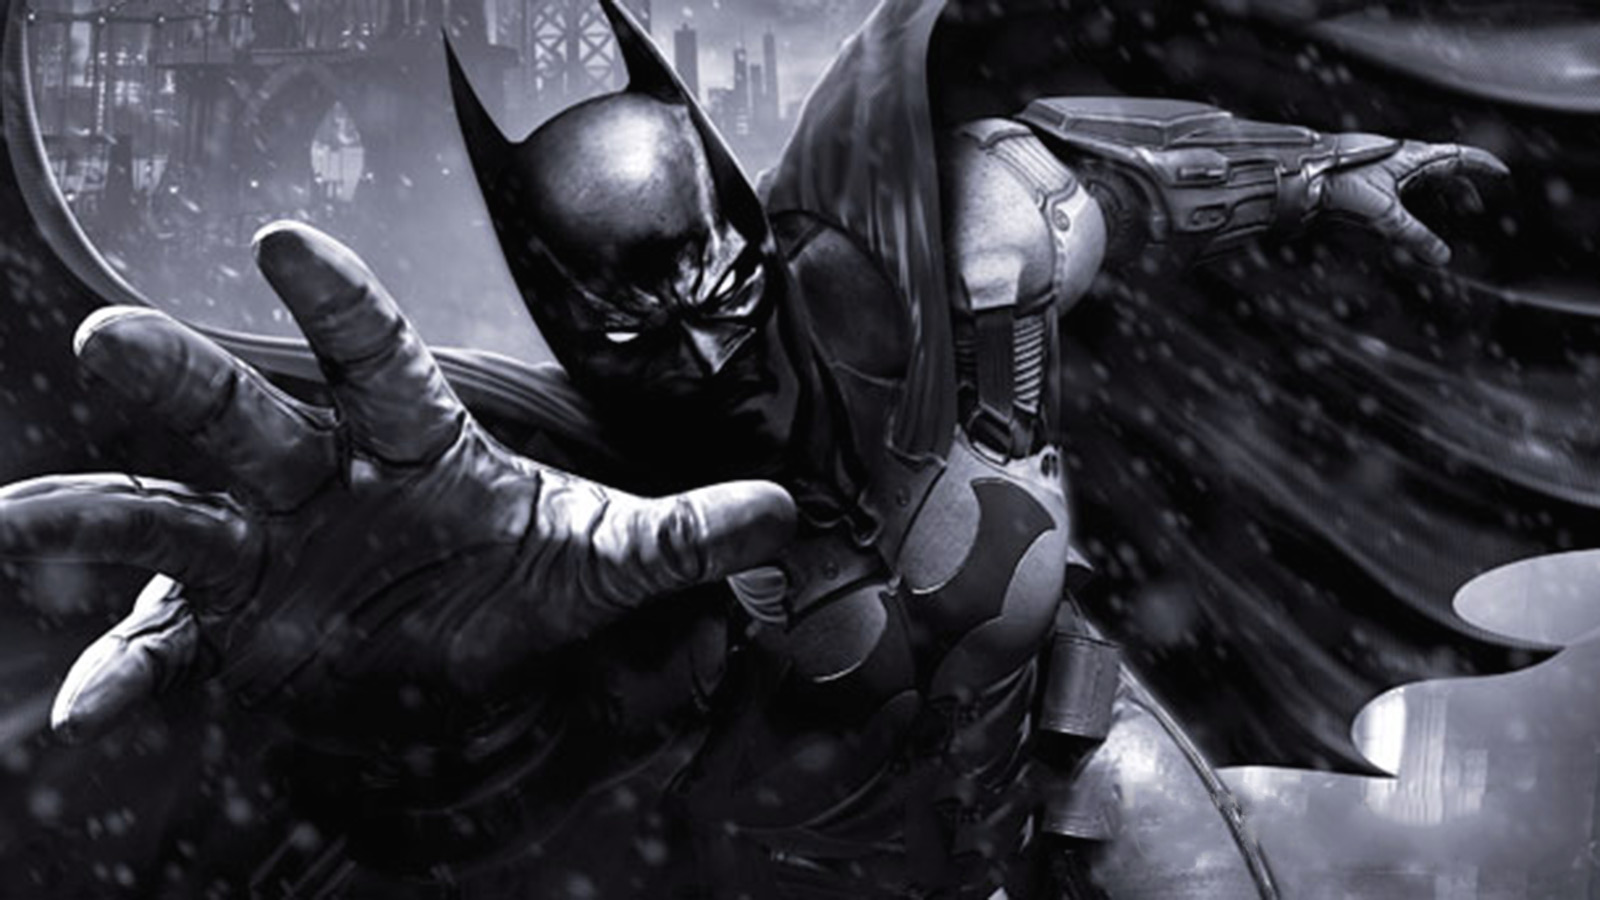 Batman: Arkham Origins Art